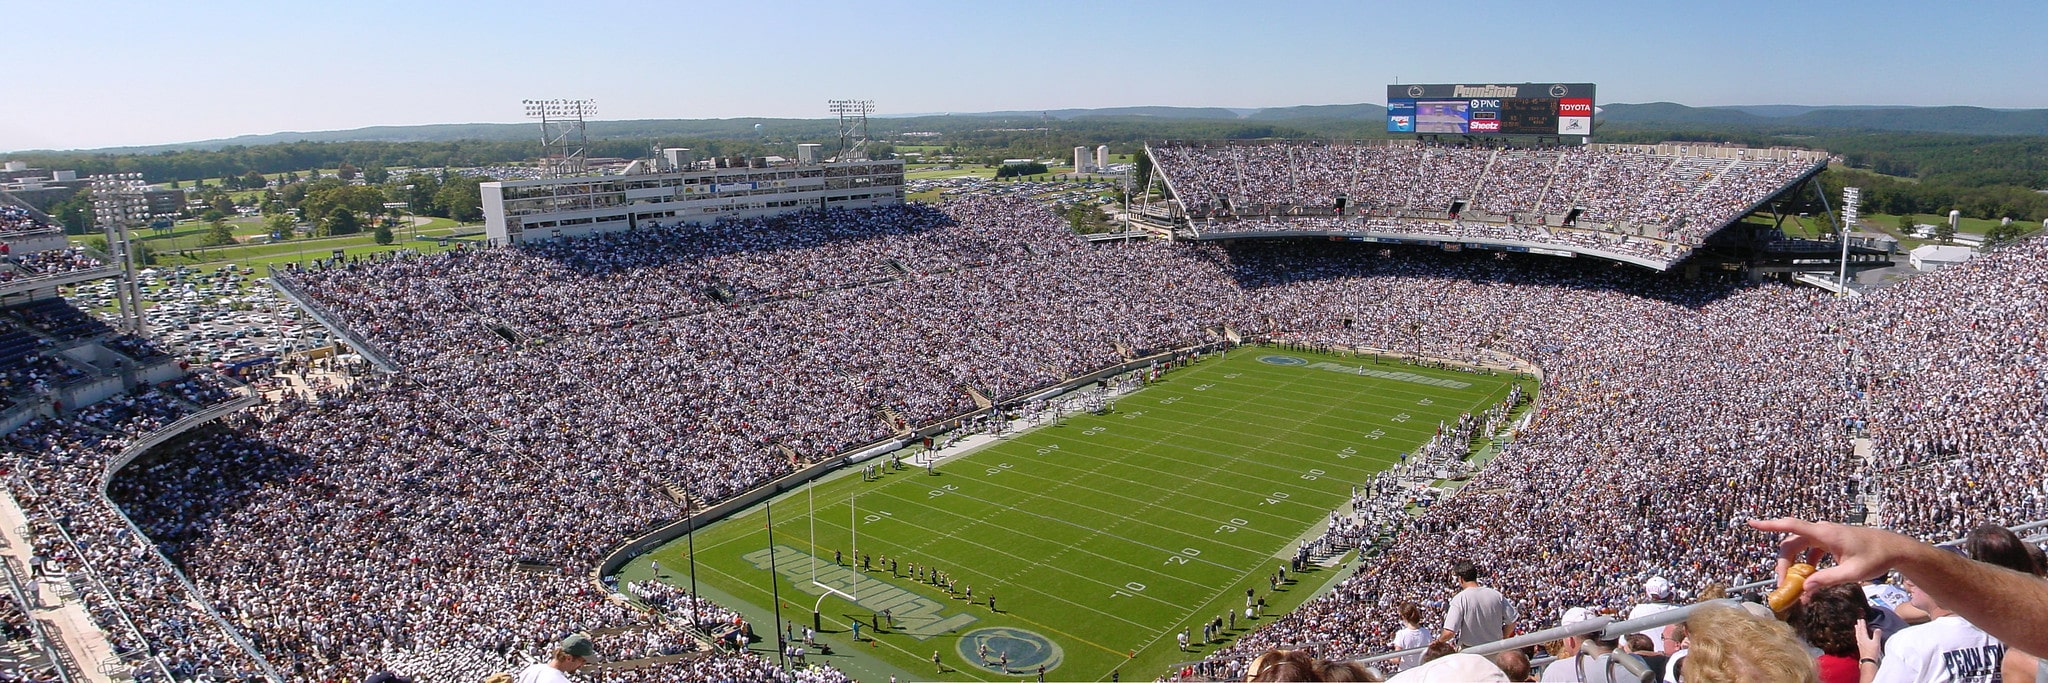 Penn State Football Stadium. Photo Credit: Steve Eng | Under Creative Commons License